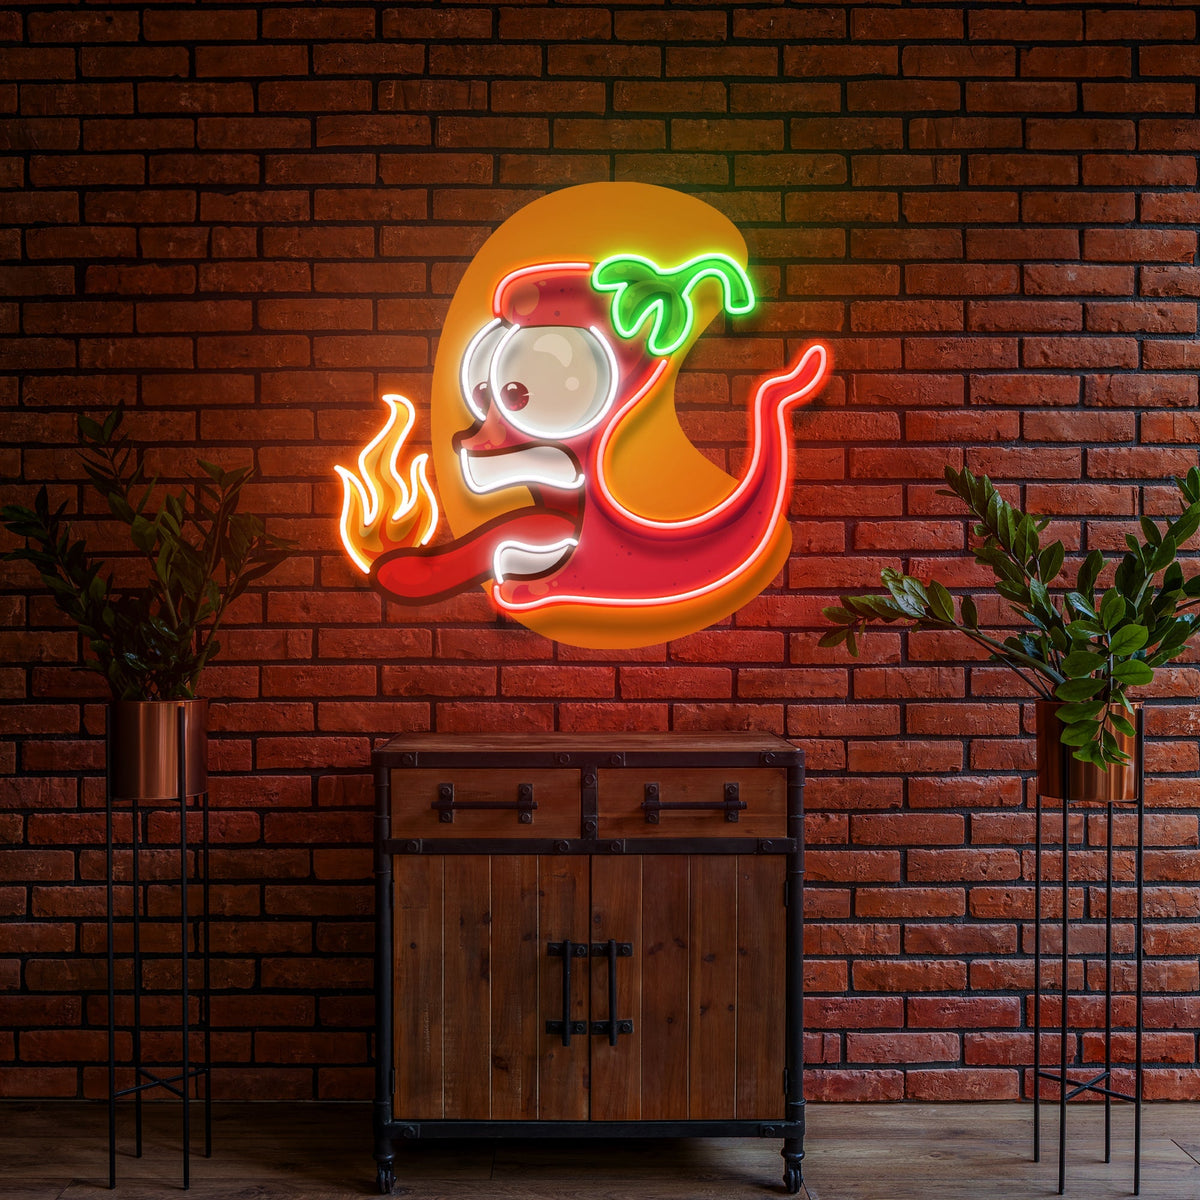 Red Chili Mascot Mexican Restaurant Decor Artwork Led Neon Sign Light